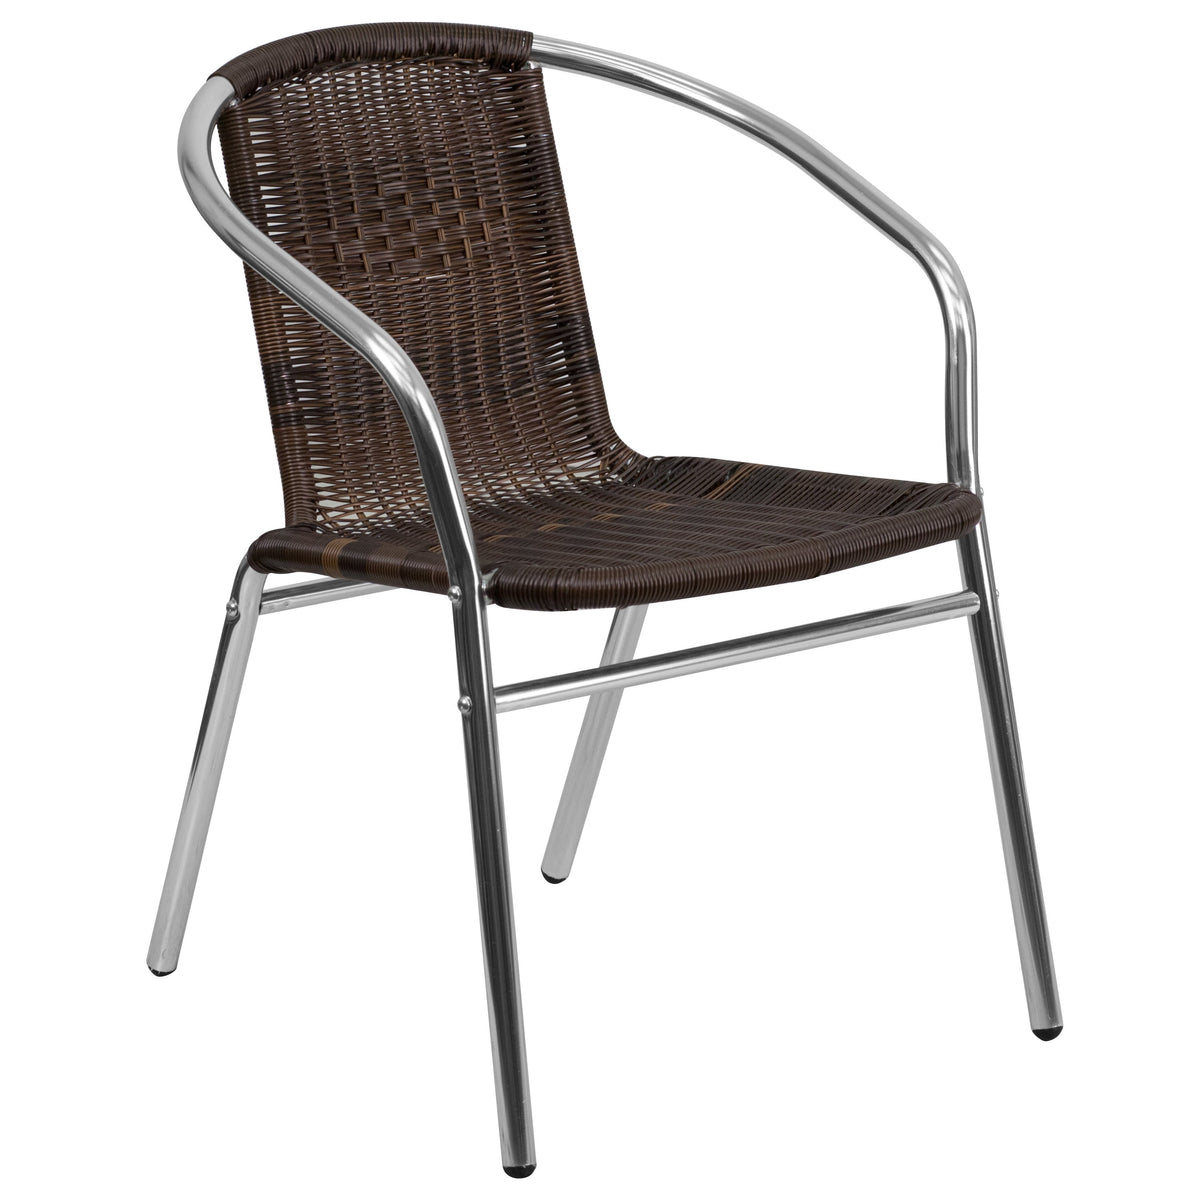 Dark Brown |#| 23.5inch Round Aluminum Indoor-Outdoor Table Set with 4 Dark Brown Rattan Chairs